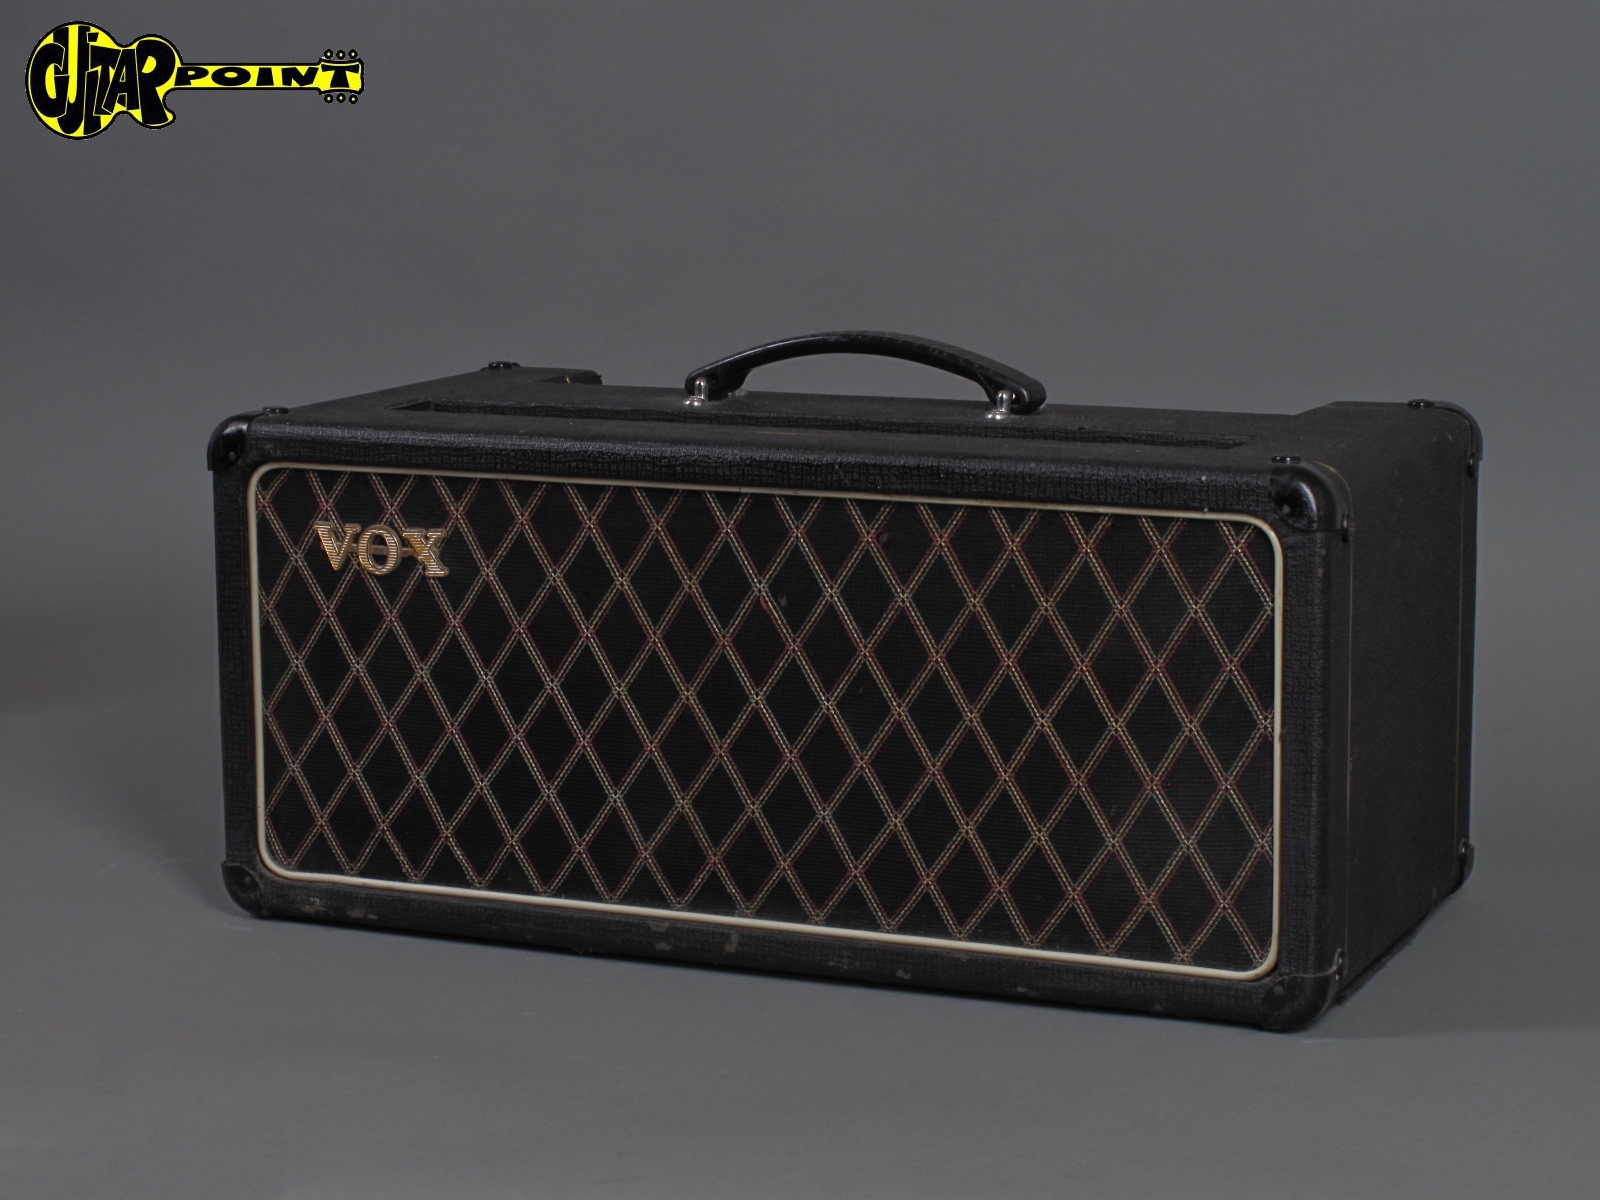 https://guitarpoint.de/app/uploads/products/1965-vox-ac-50-all-tube-amplifier/Vox65AC50_02142_2_1.jpg